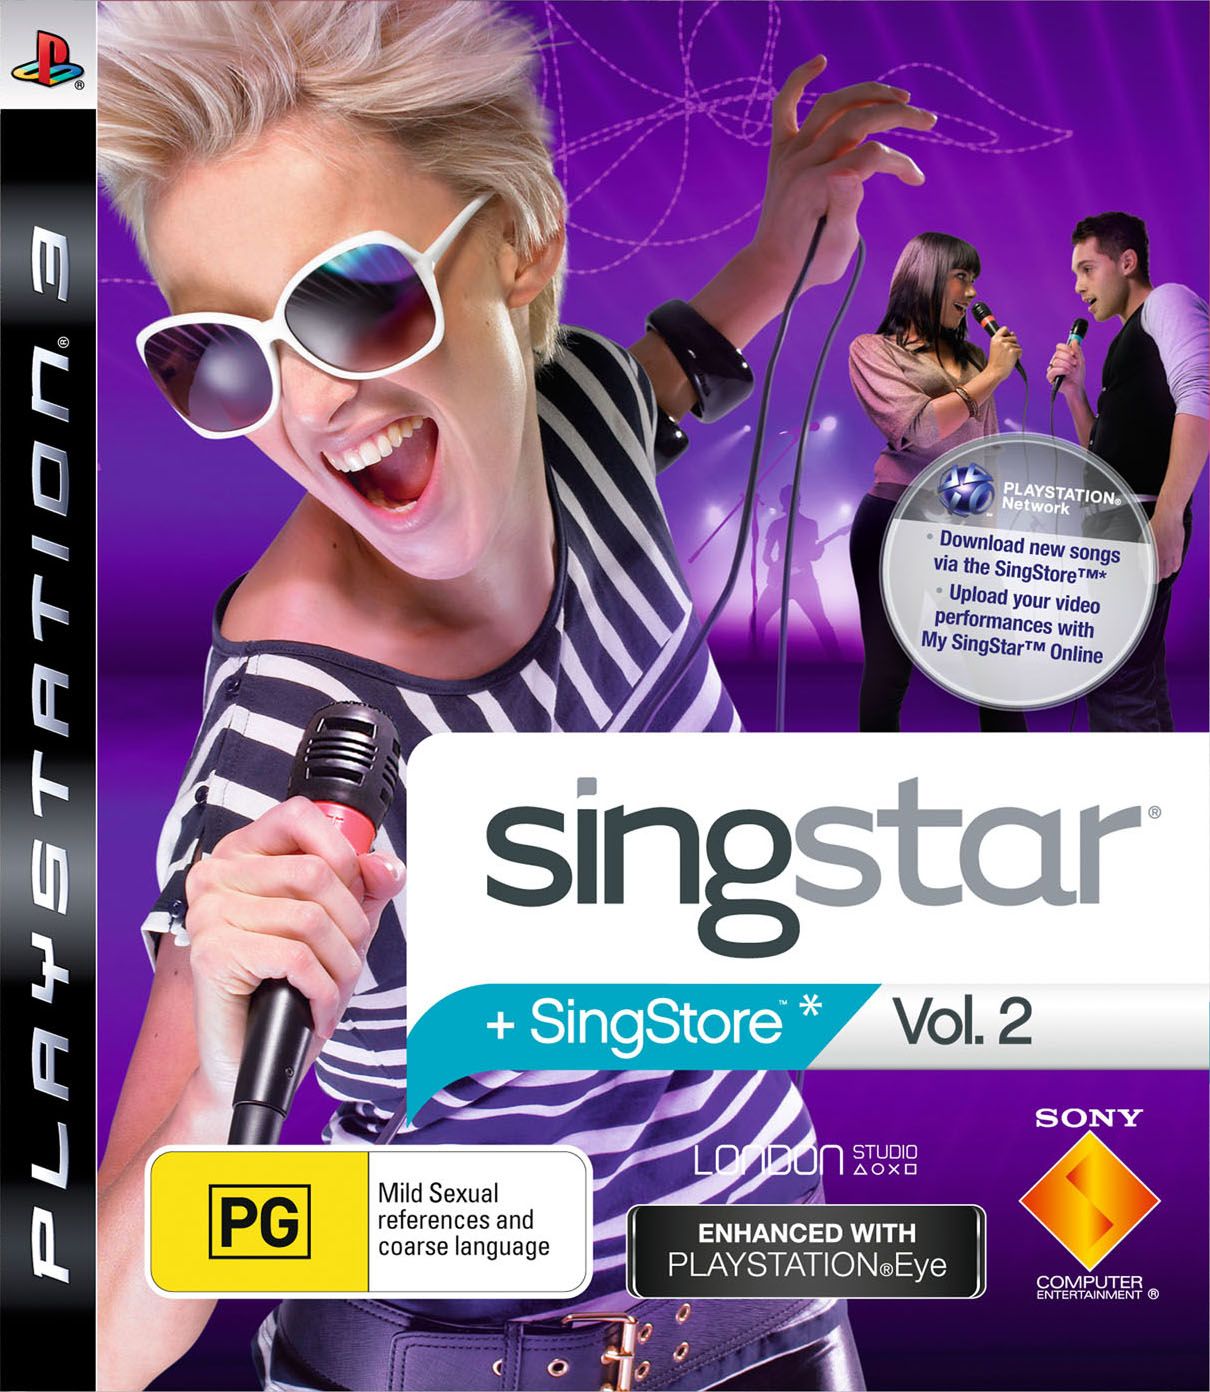  SingStar Vol.2 Software PS3 : Video Games